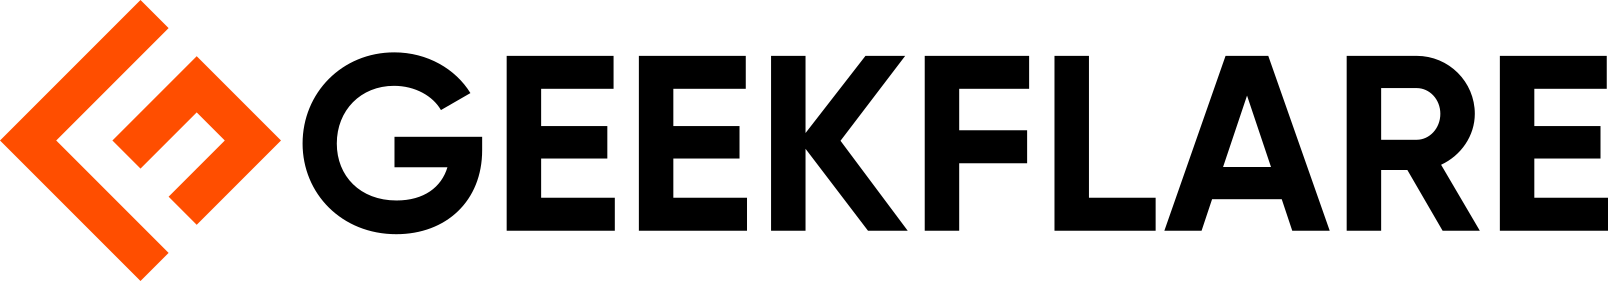 Geekflare-logo